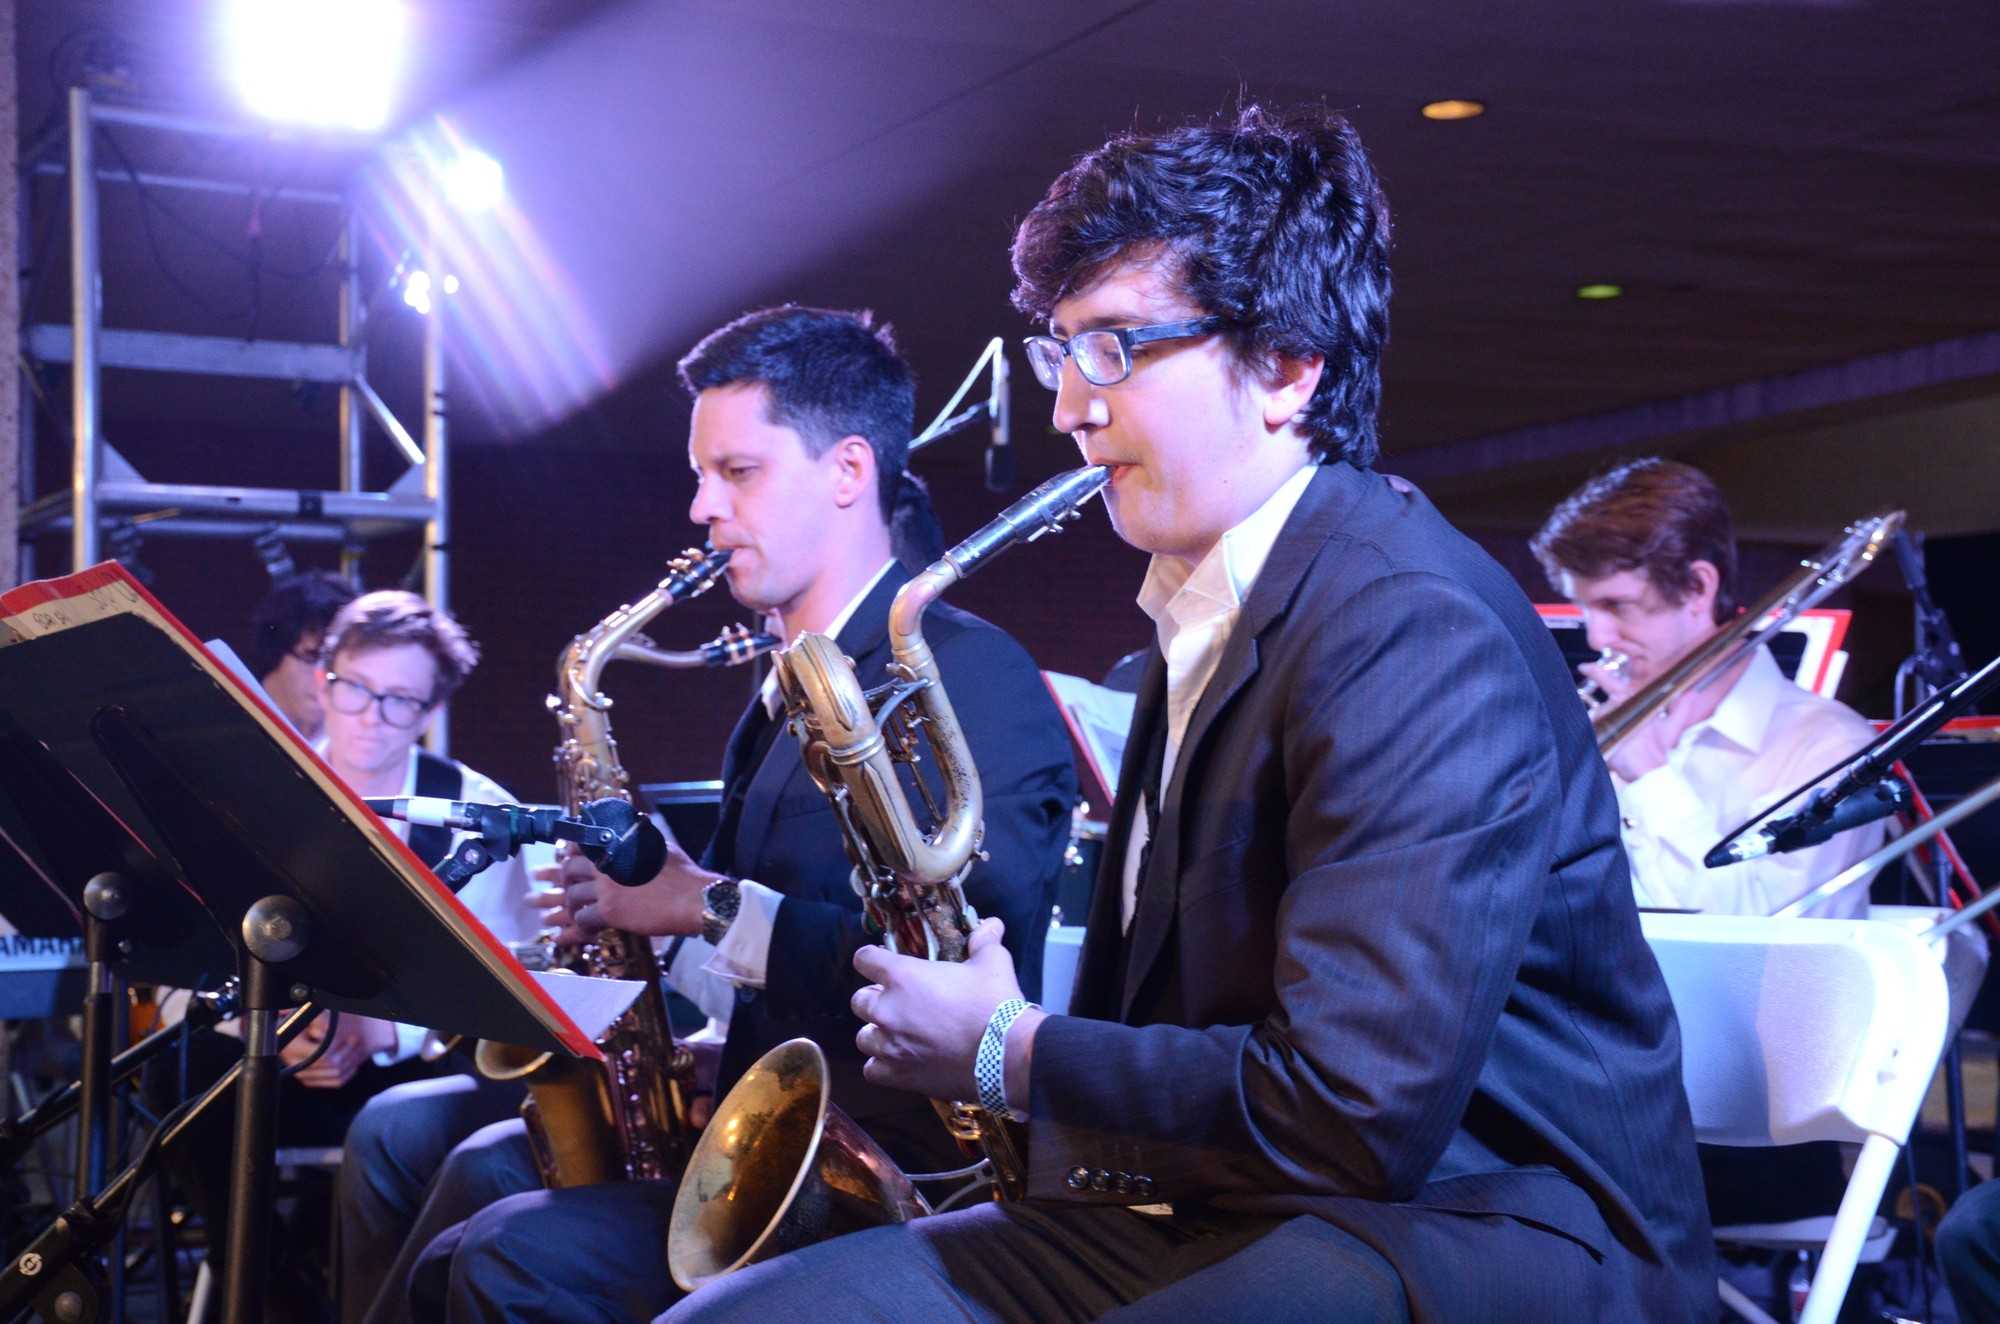 CSUN jazz band members play various instruments